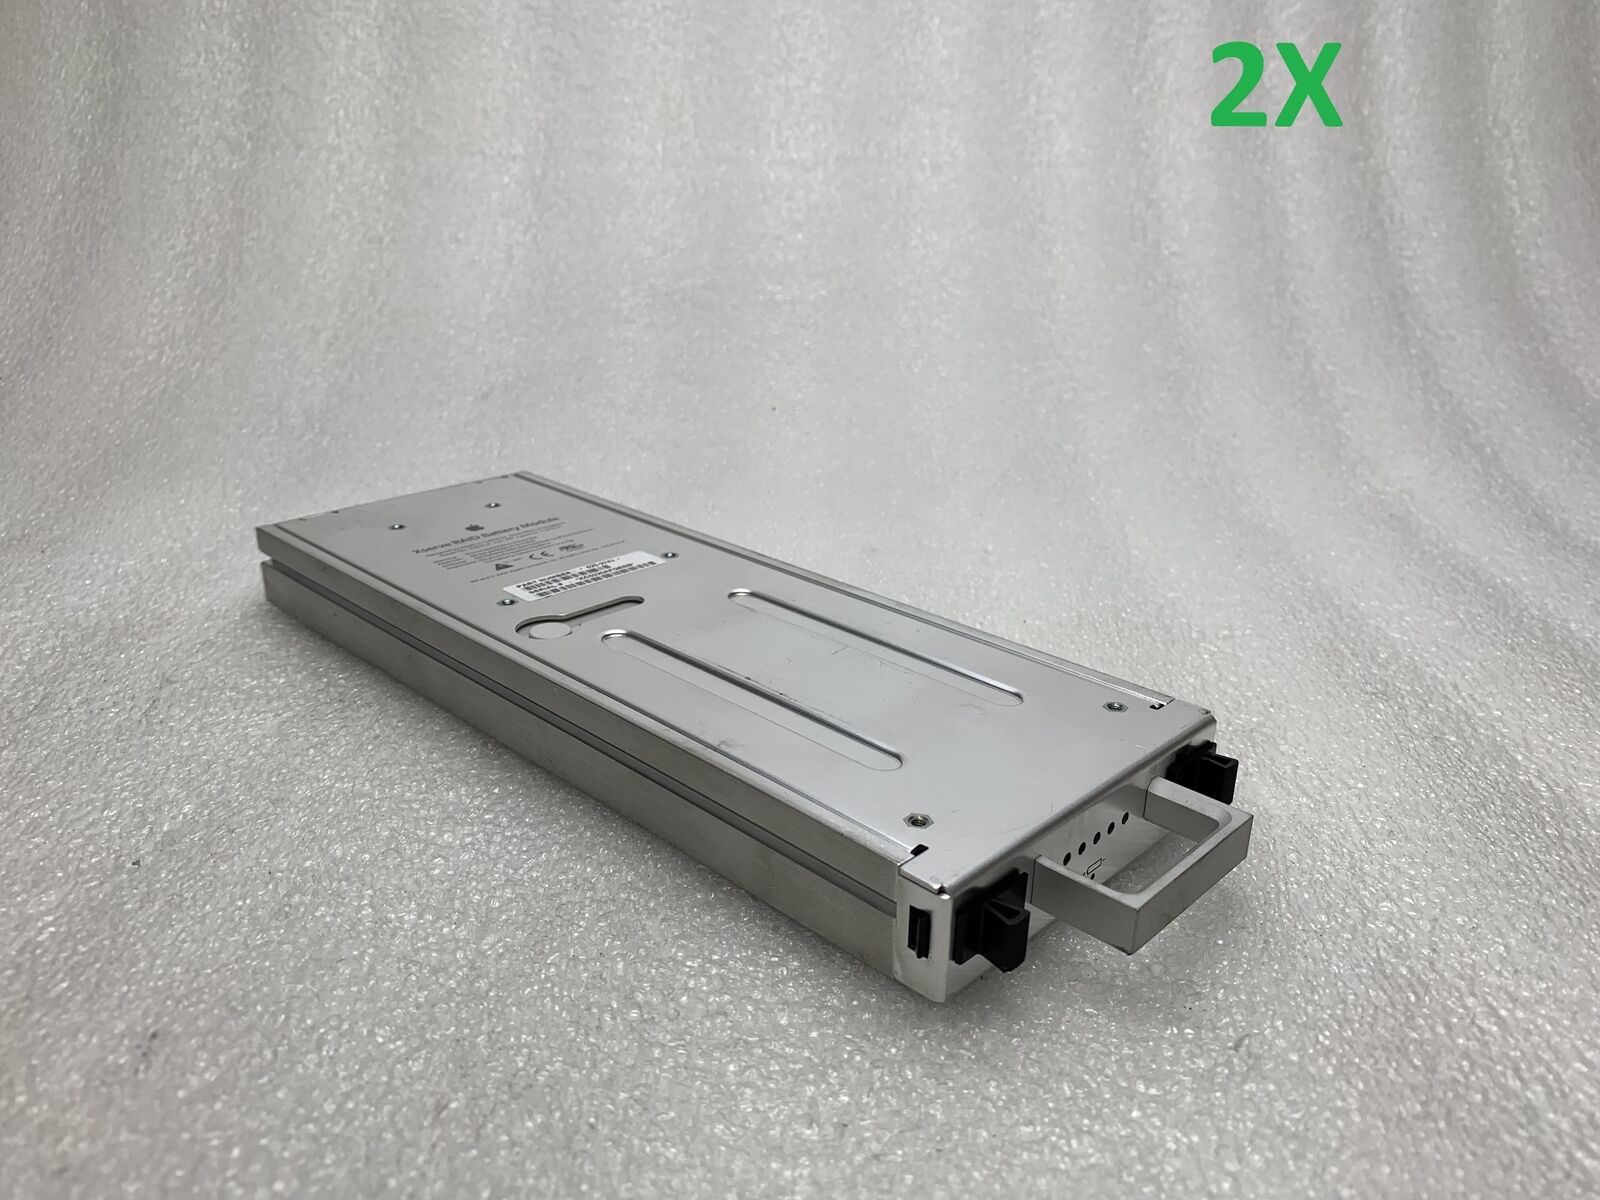 Lot of 2 Apple Xserve RAID Battery Module 620-2743 Model : A1037-A AS-IS